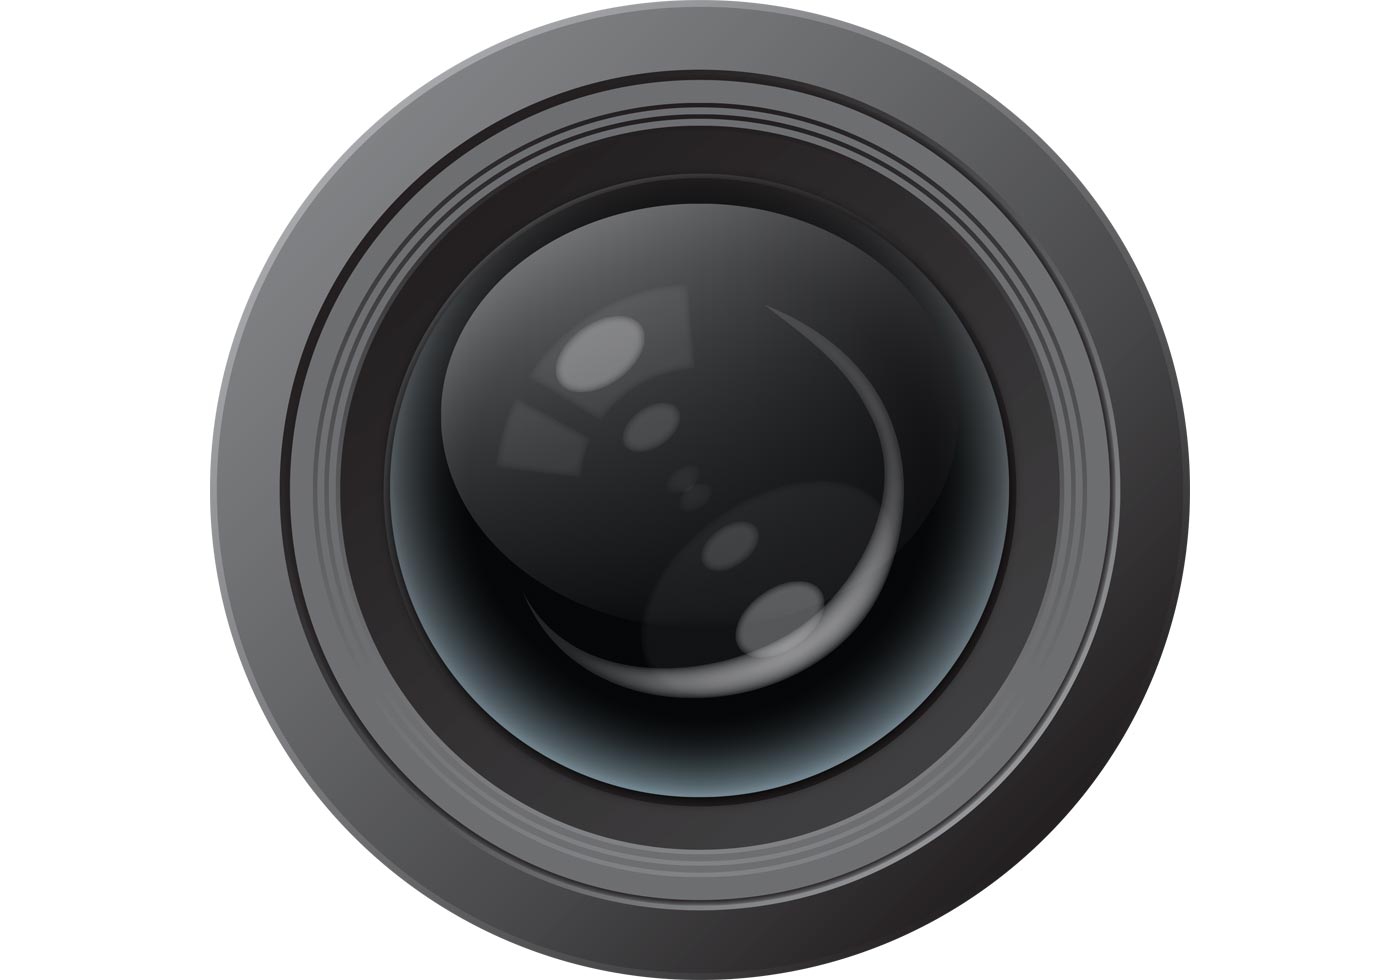 Camera Lens - Download Free Vector Art, Stock Graphics ...